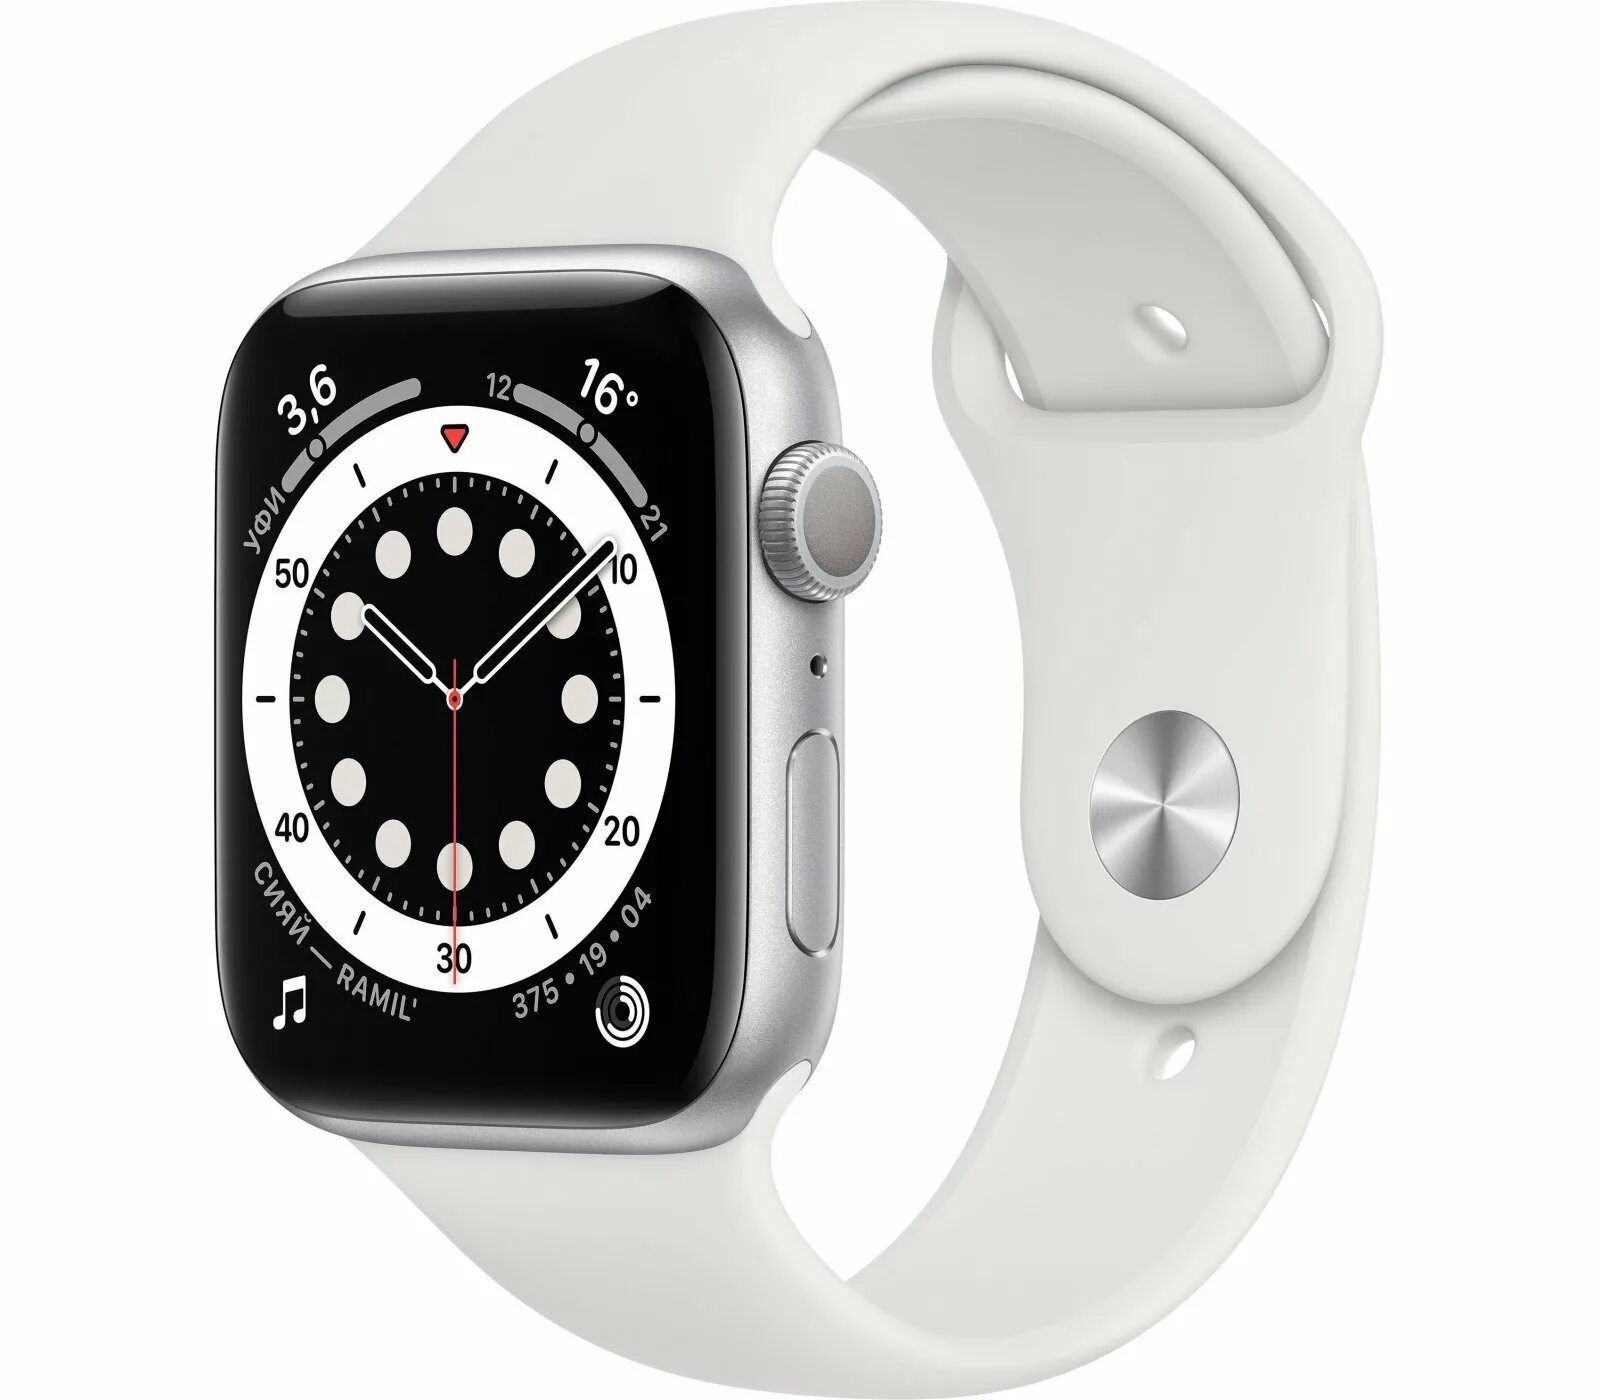 Iphone watch. Apple watch Series 3 42 mm. Смарт-часы Jet Sport SW-4c, 1.54". Apple watch Series 6 40mm Gold Aluminum Case Pink Sand Sport Band. Умные часы Apple watch Series 6 GPS 44mm.